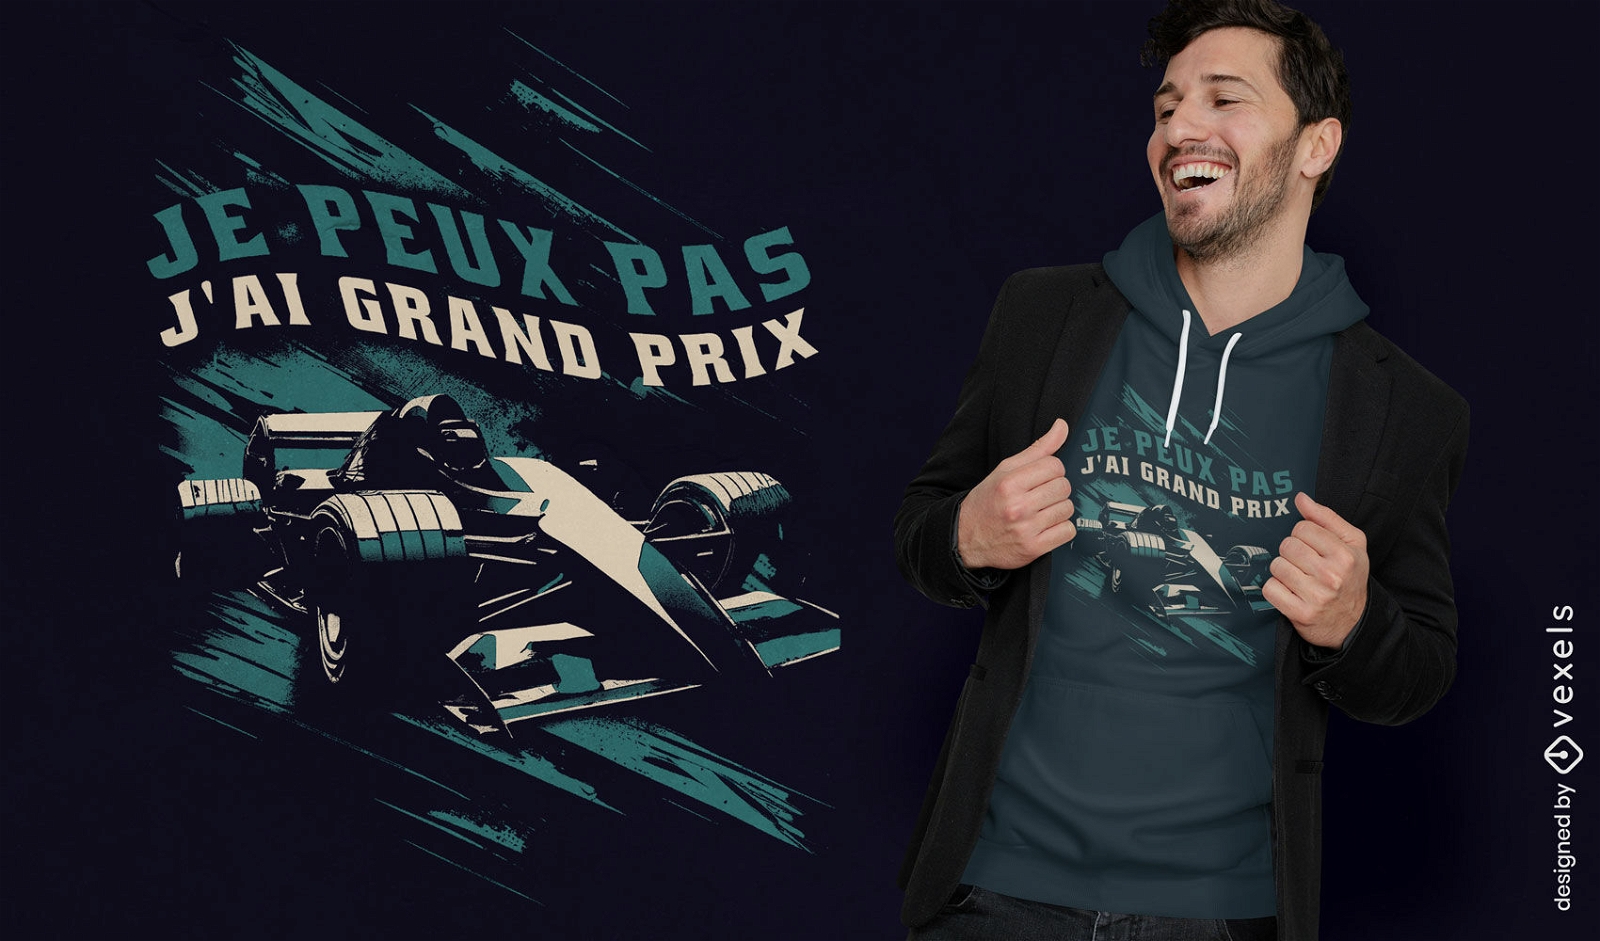 Grand Prix race car t-shirt design